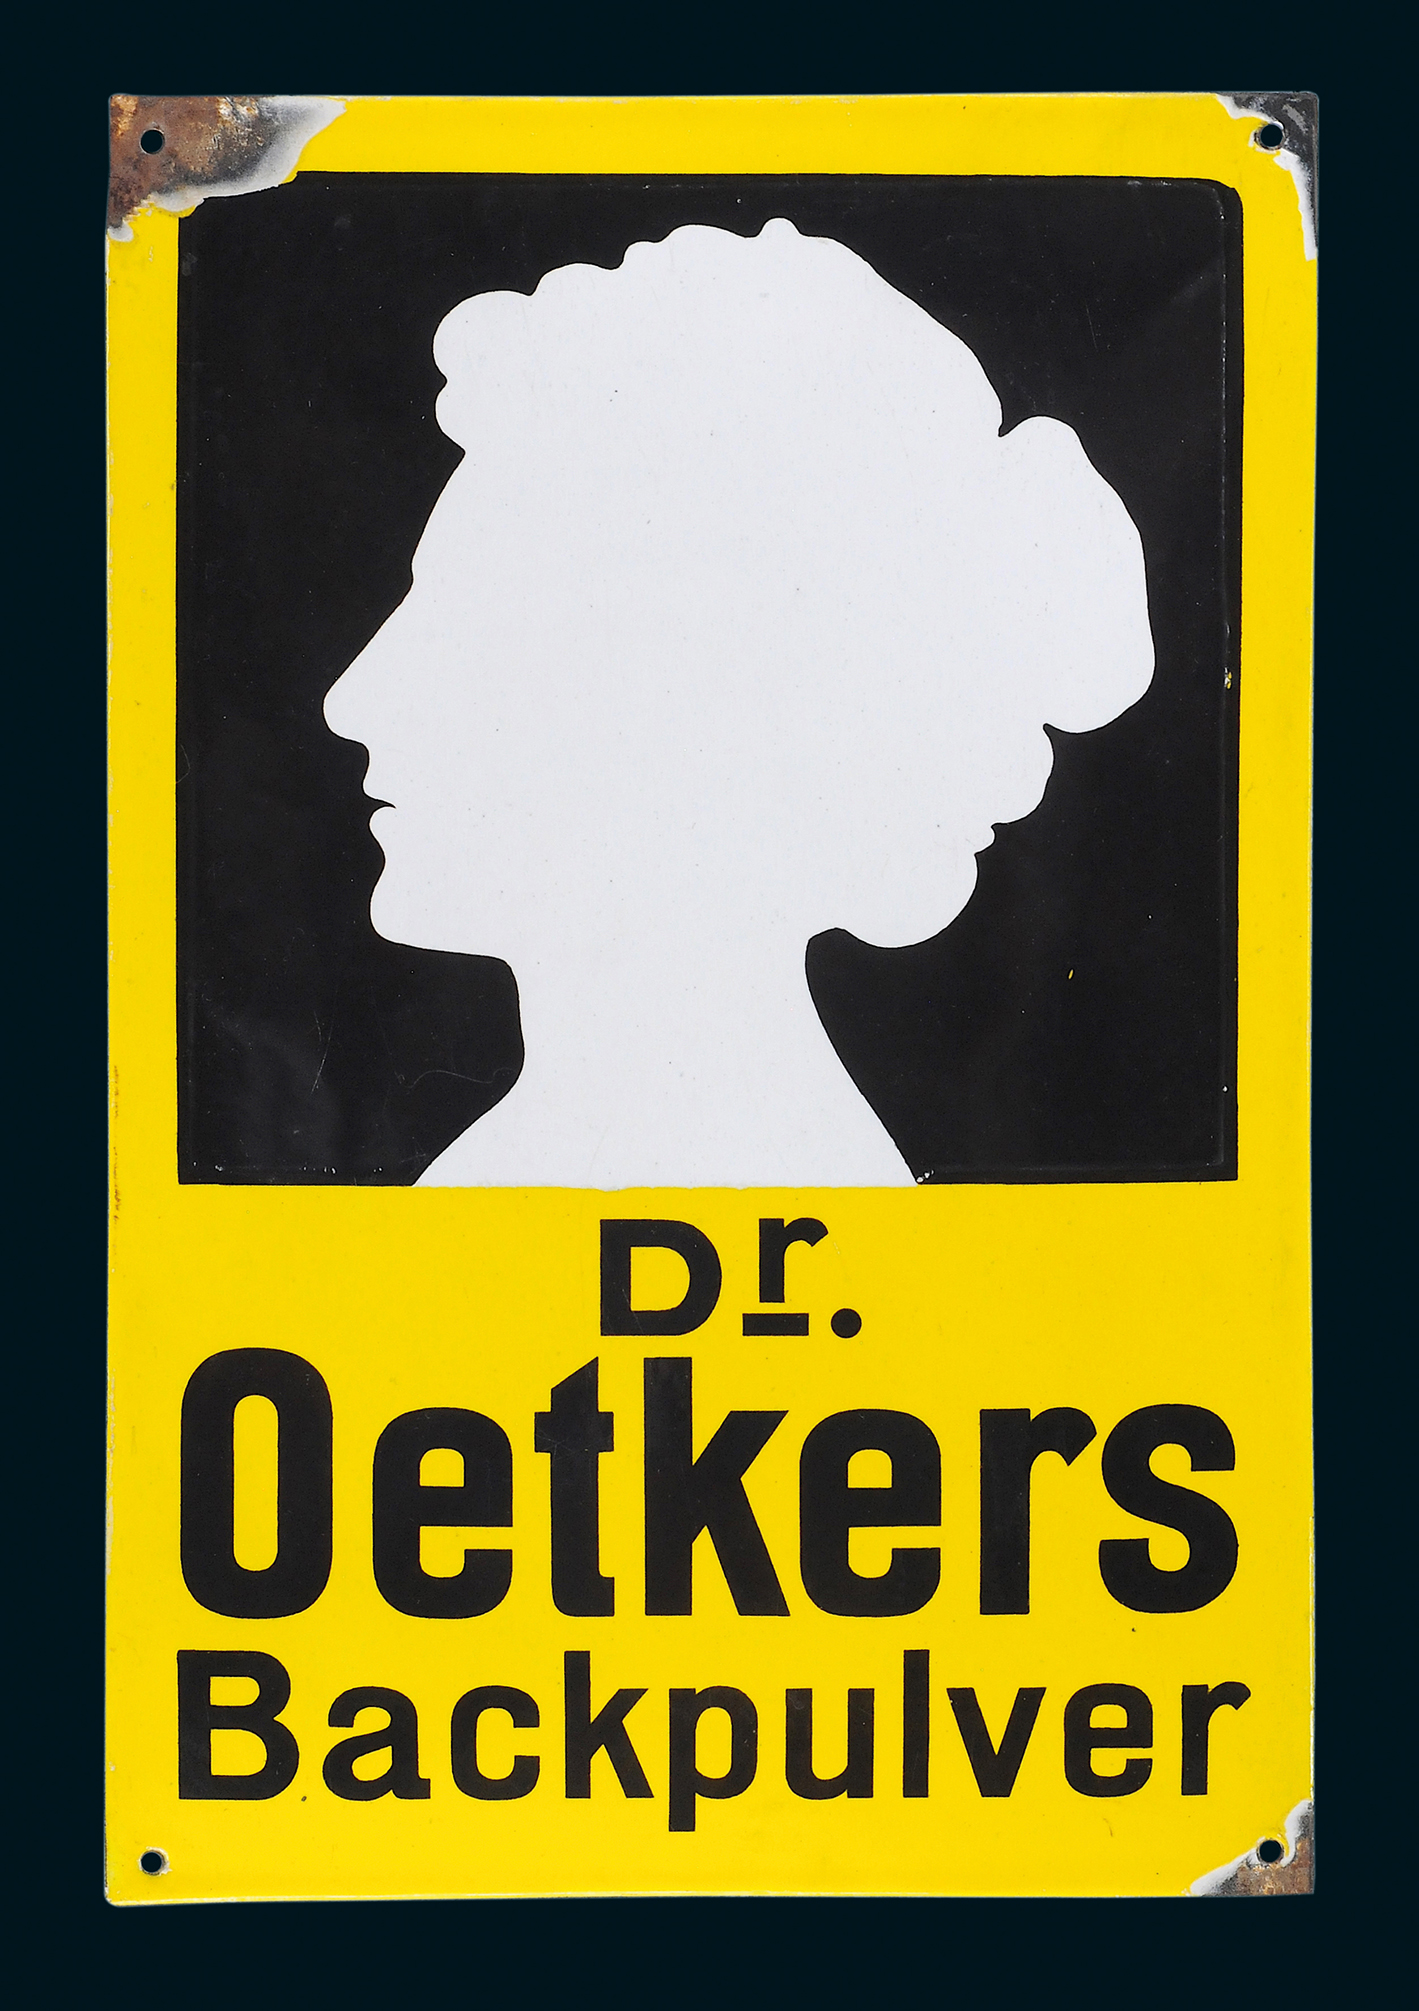 Dr. Oetkers Backpulver